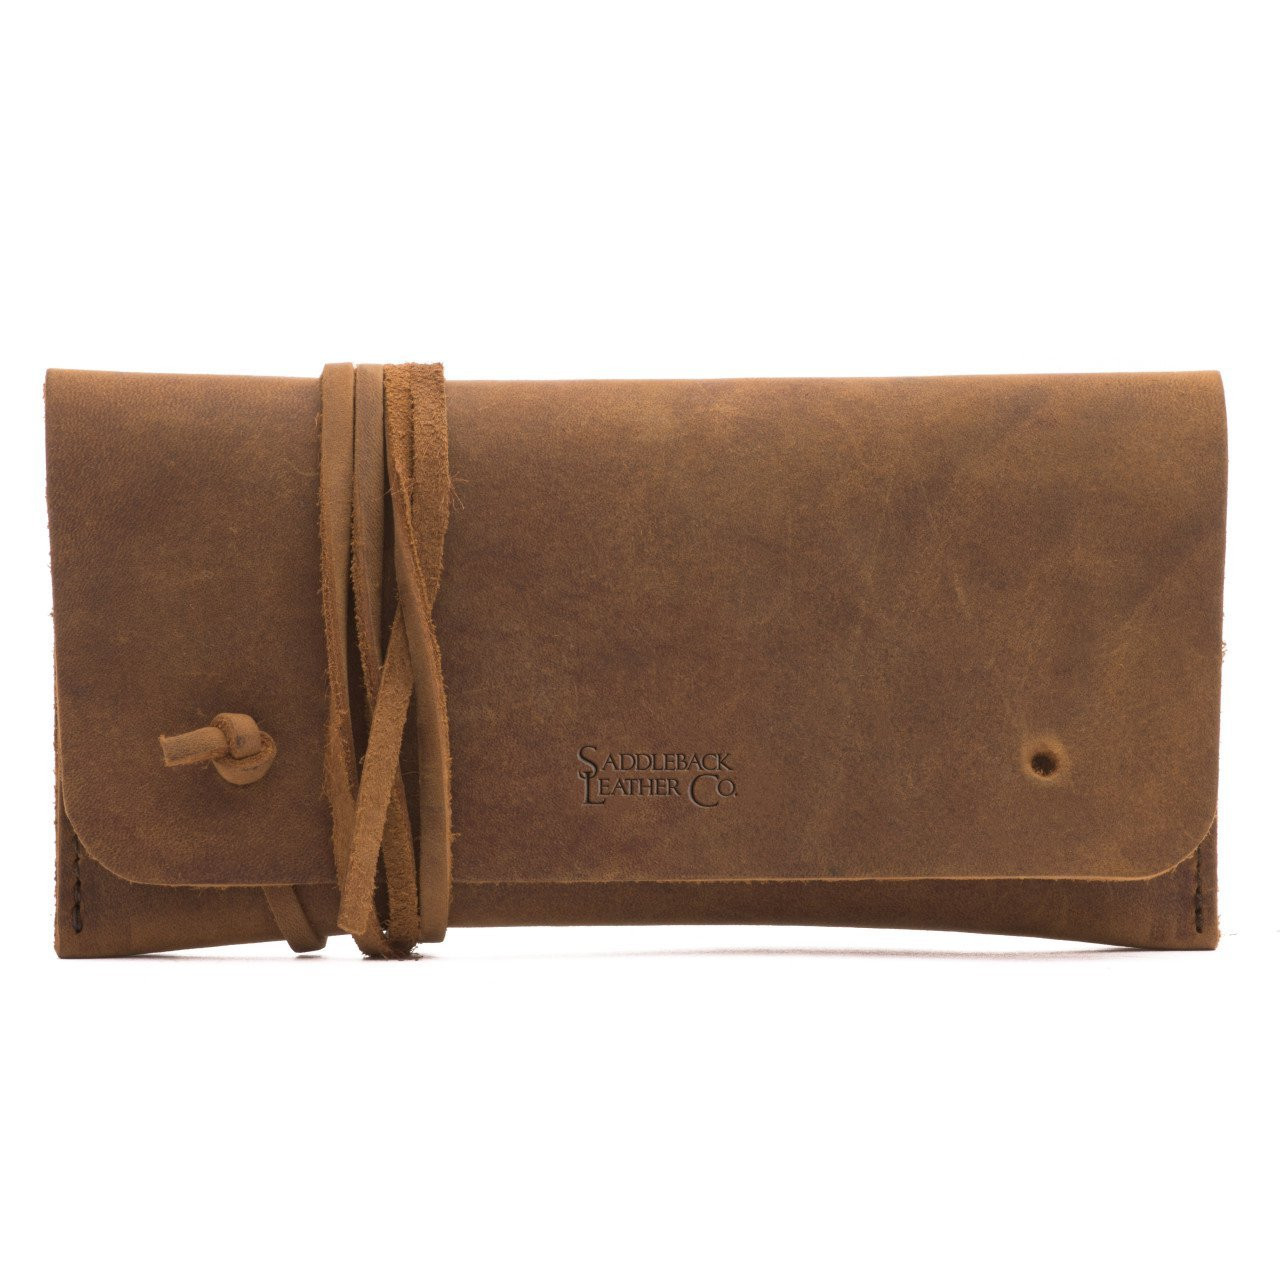 Leather Travel Accessories - Personalised Suit Carrier, Garment Bag,  Passport Holder/ Case, Flight Bag, Bum Bag, Fanny Pack, Belt Bag – MAHI  Leather